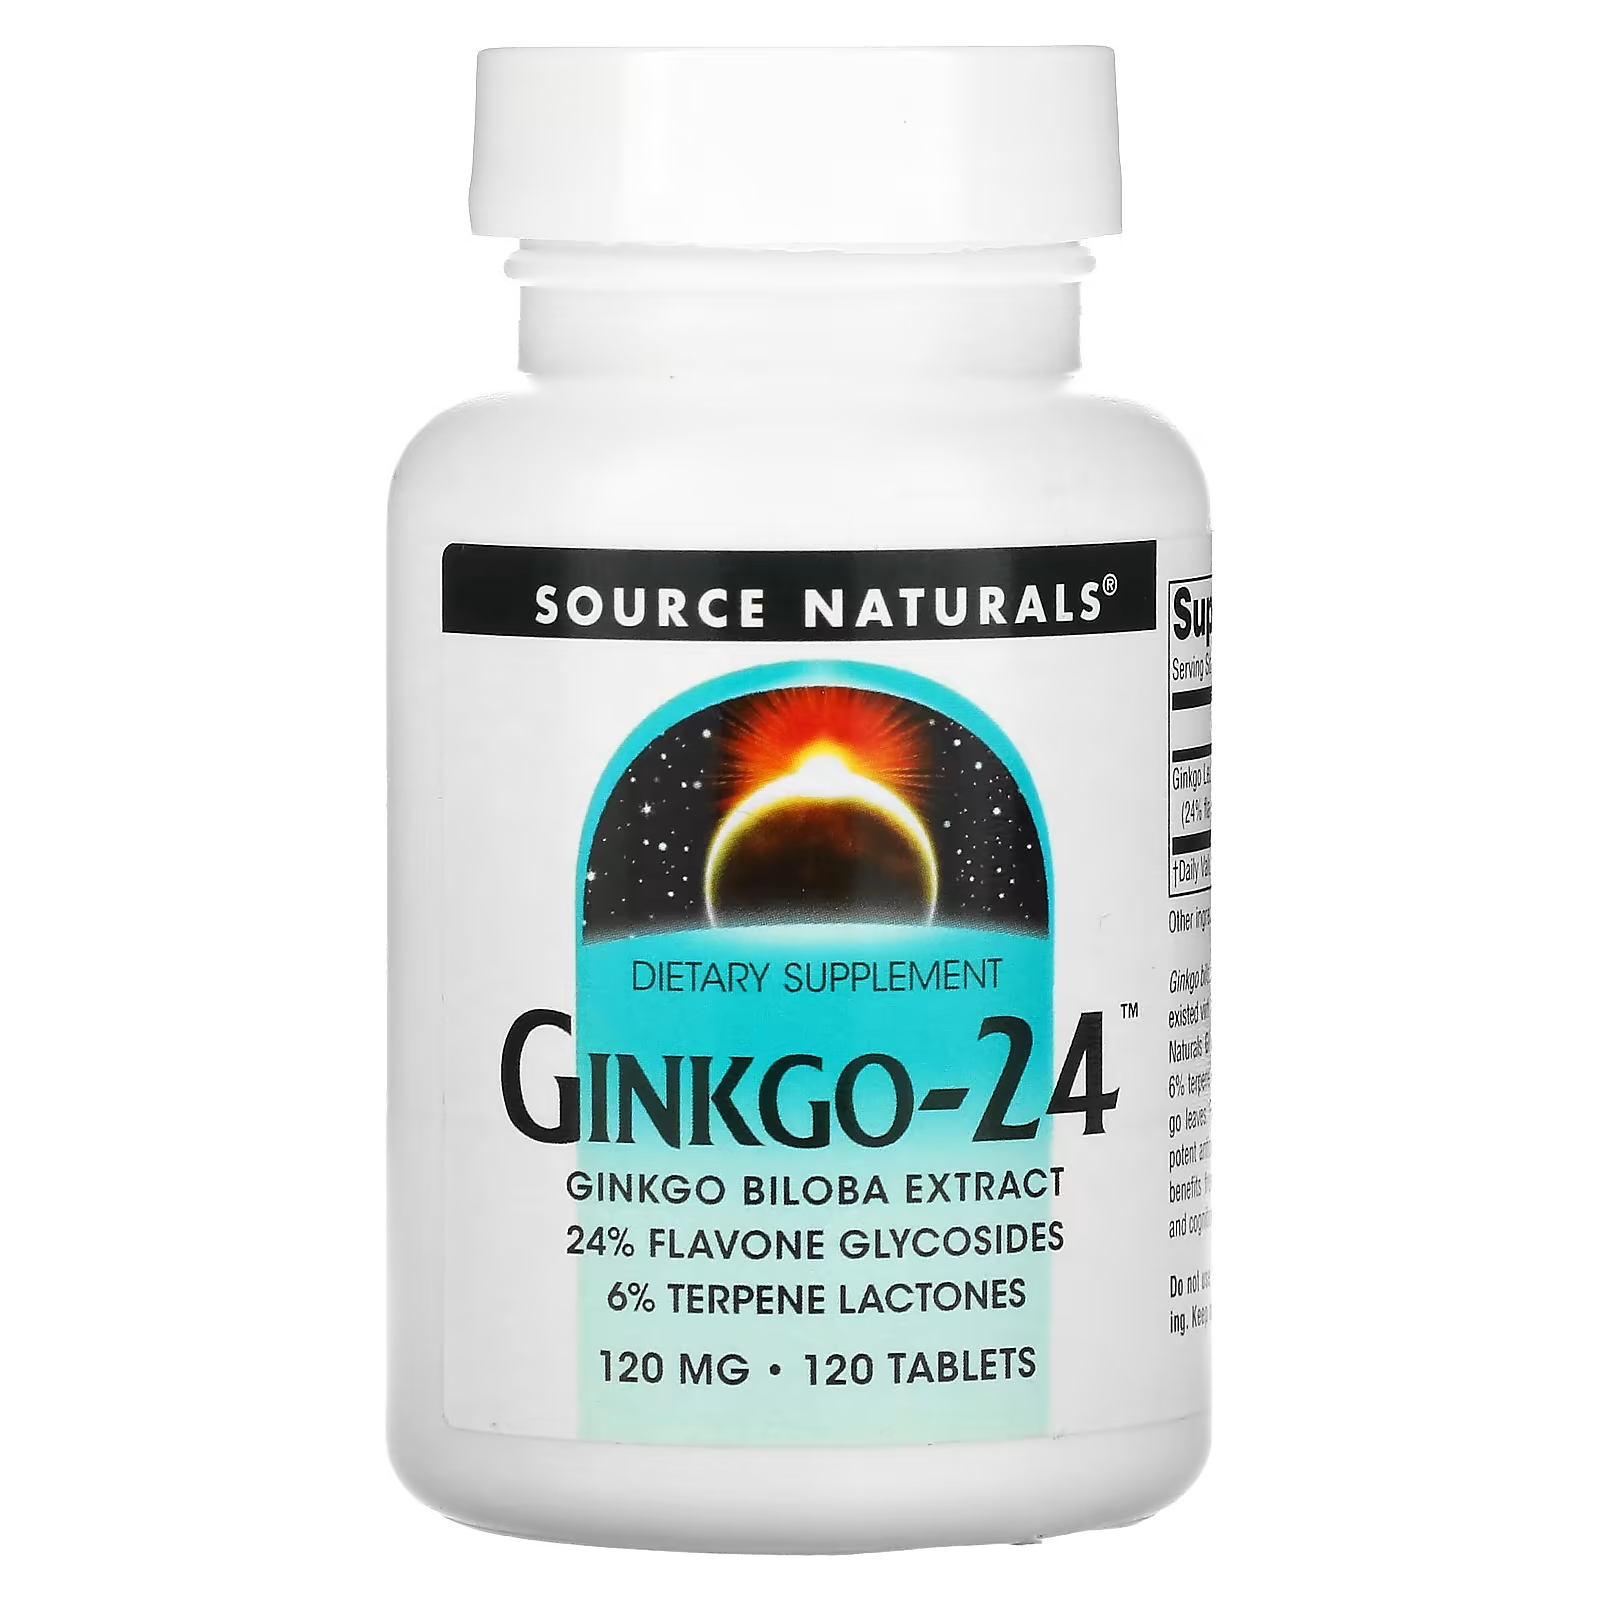 source naturals гинкго 24 40 мг 120 таблеток Source Naturals Ginkgo-24 гинкго билоба,120 мг, 120 таблеток